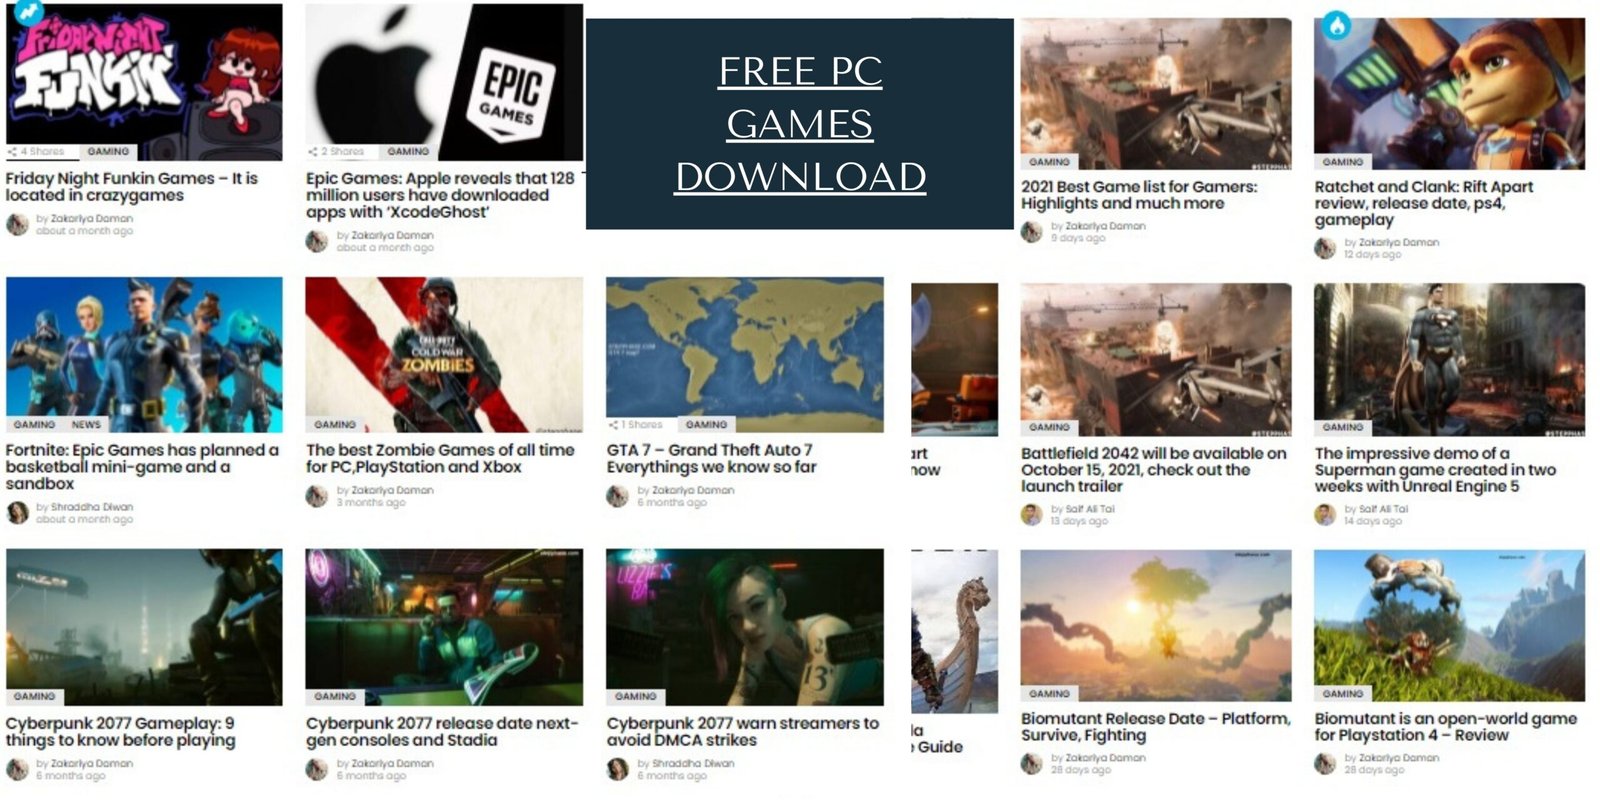 free pc games download sites reddit